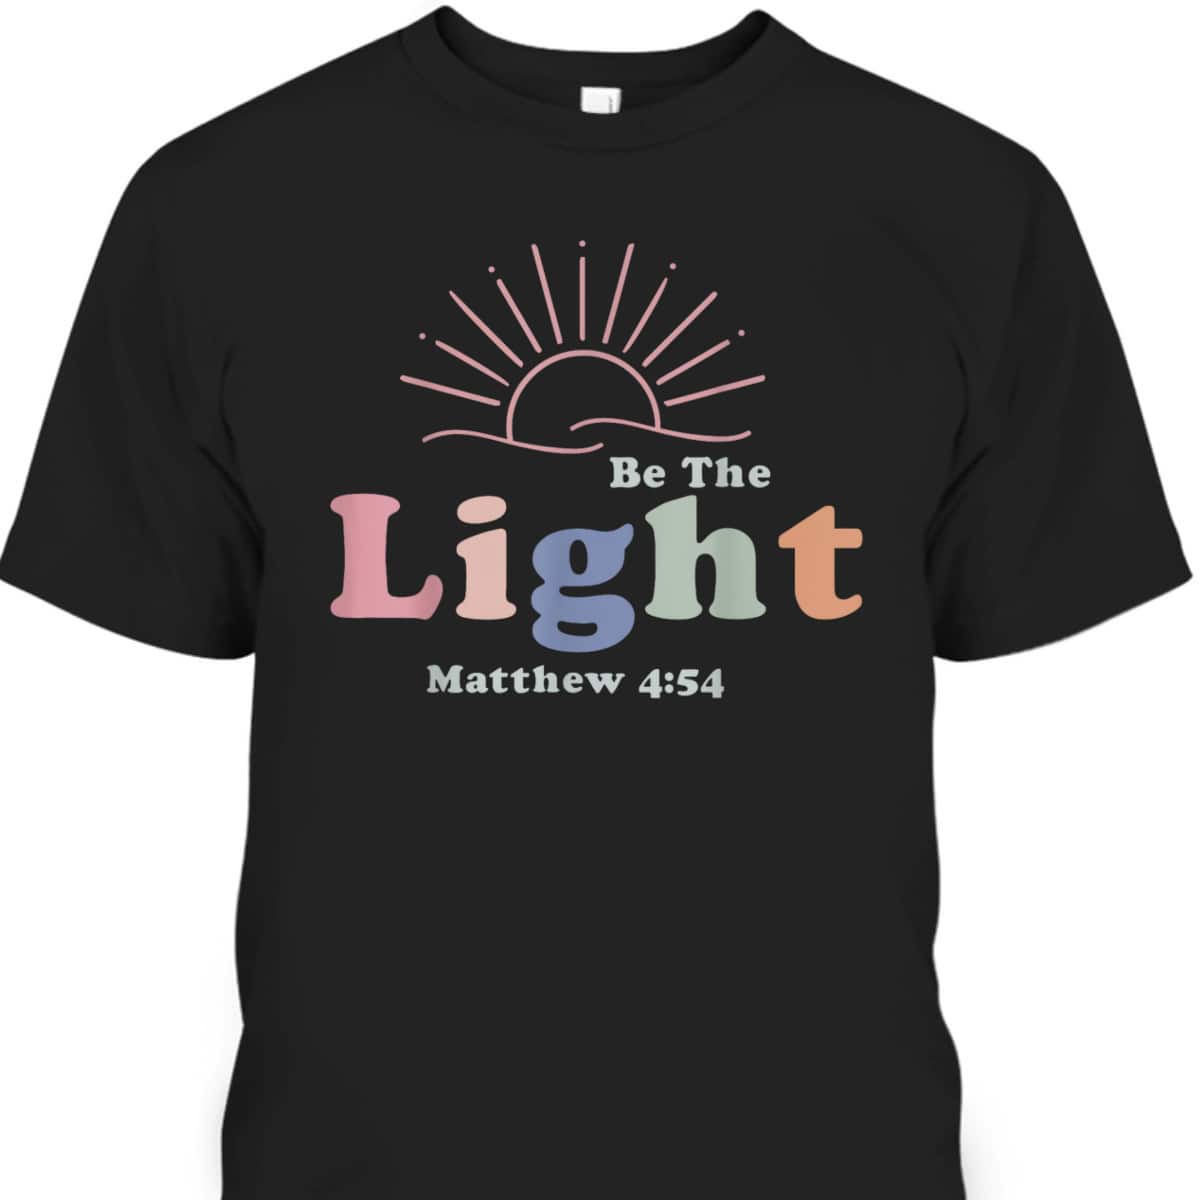 Be The Light Matthew 4:54 T-Shirt Cool Christian Inspirational And Motivational Gift